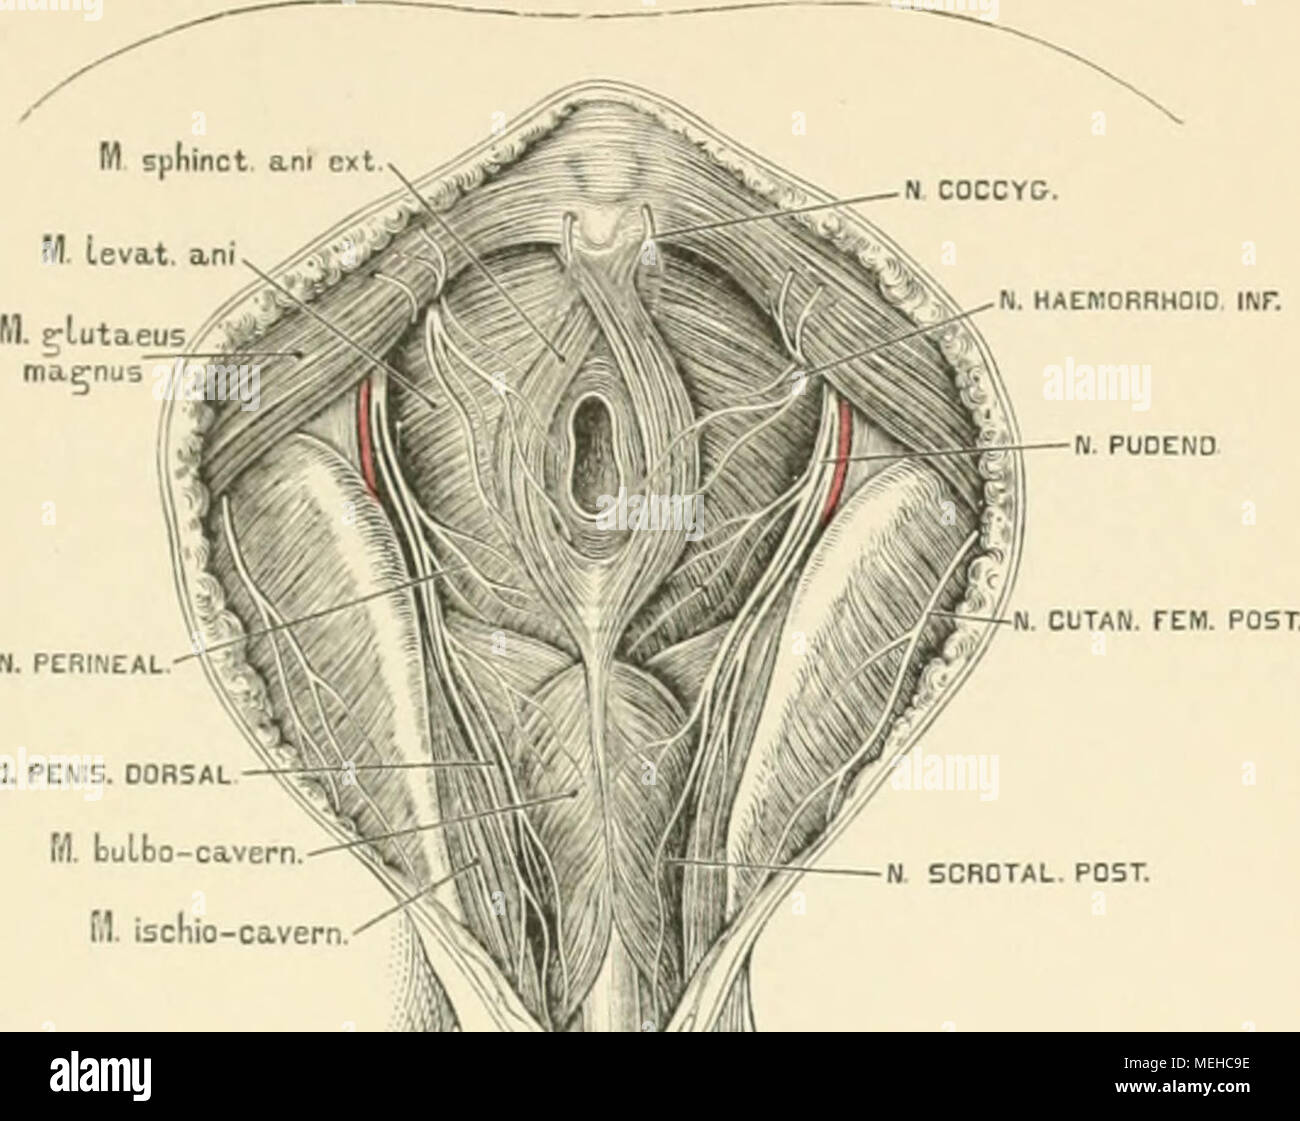 . Die descriptive und topographische Anatomie des Menschen . H. PERINEAL ;i. pch:s. oors M. Mbo-cavera--^j|MMH f.1. ischio-caverr V I H 1. / N SCROTAl. POST. Stock Photo